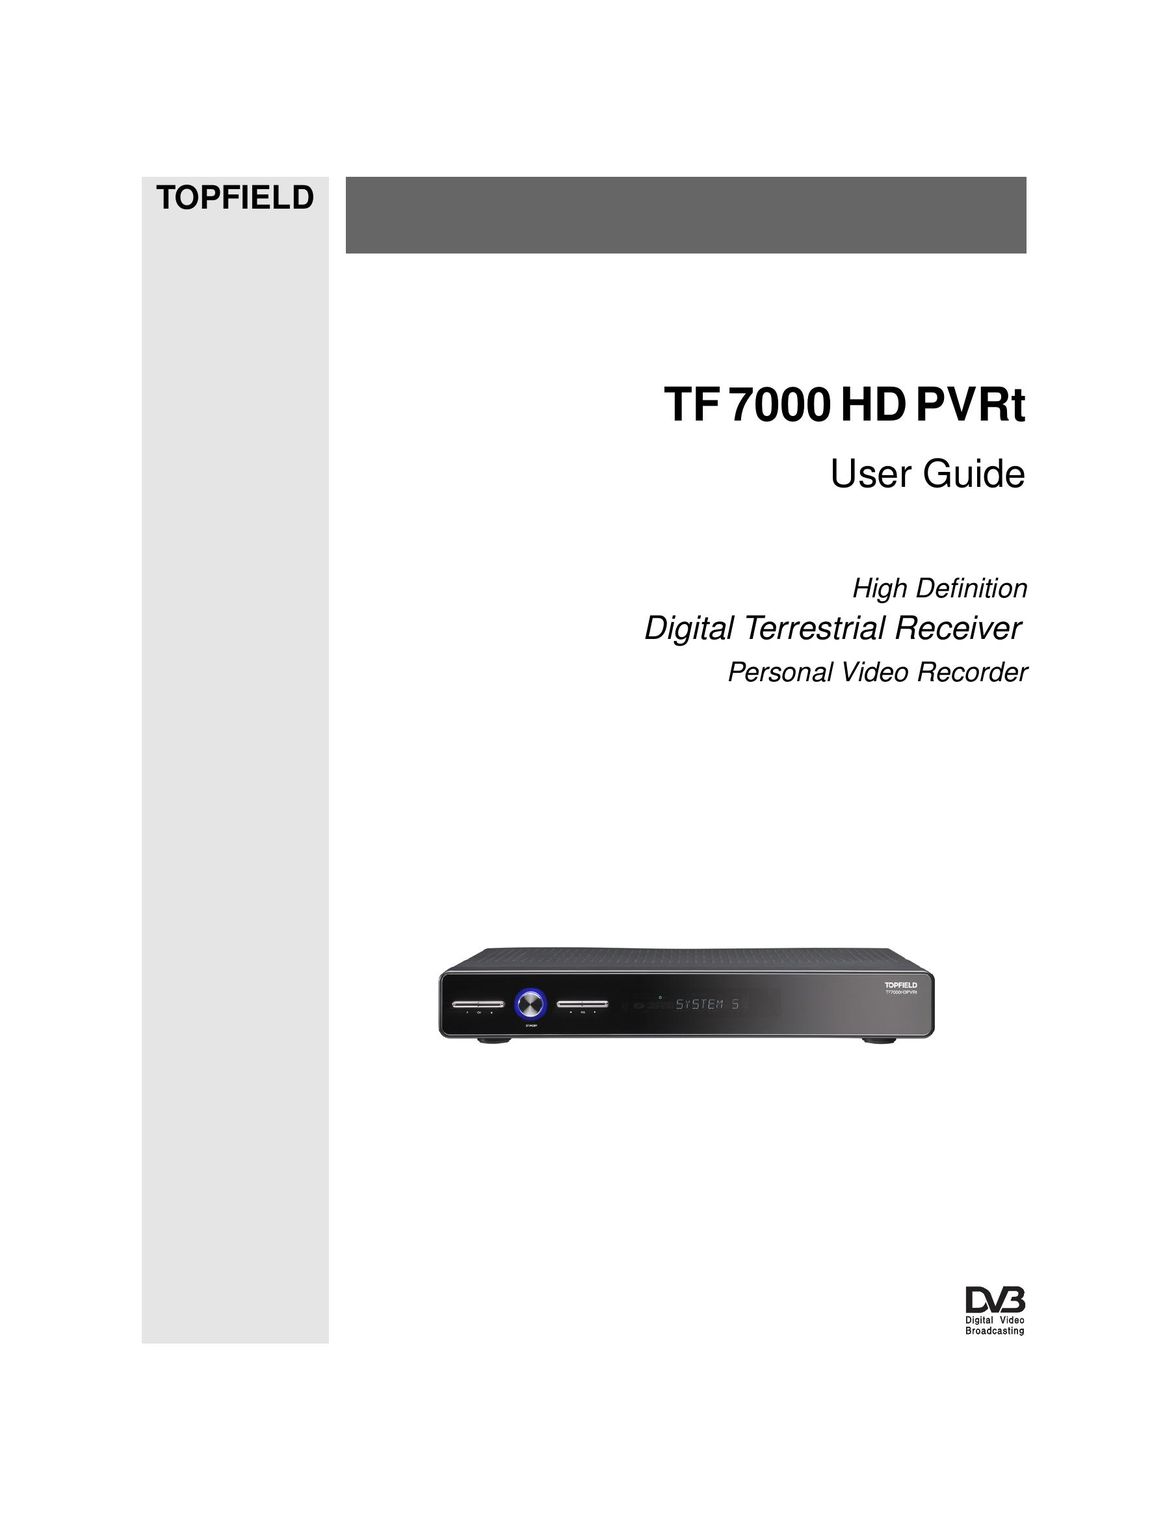 Topfield TF 7000 HD PVRt TV Receiver User Manual